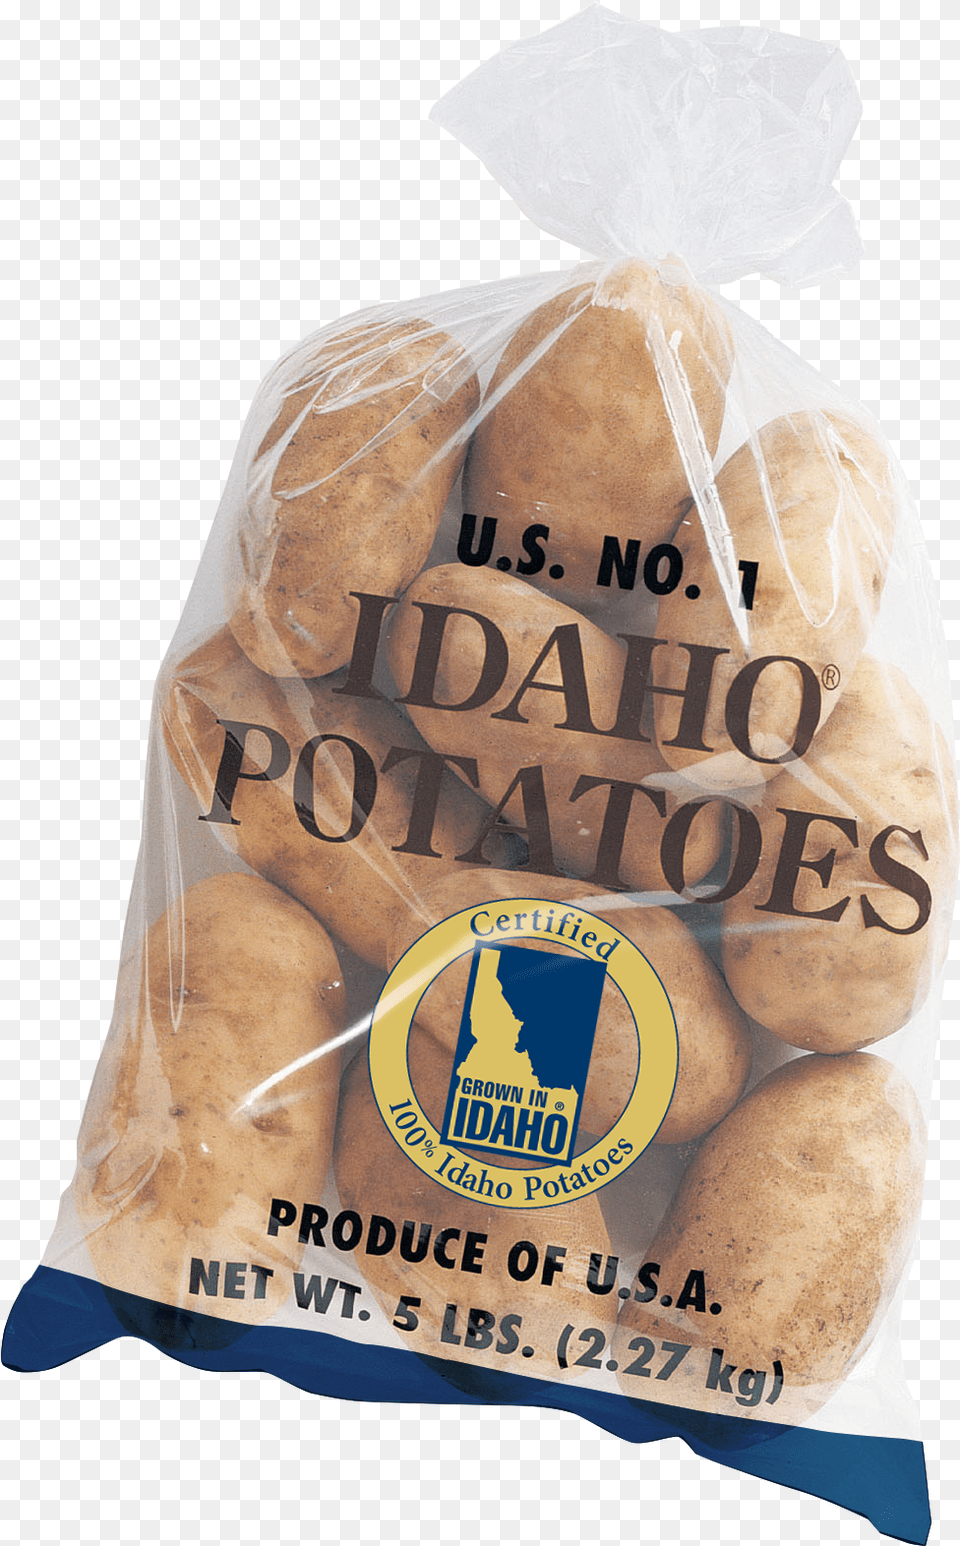 Potato Farmer 5 Lb Of Potatoes, Bag, Vegetable, Food, Produce Png